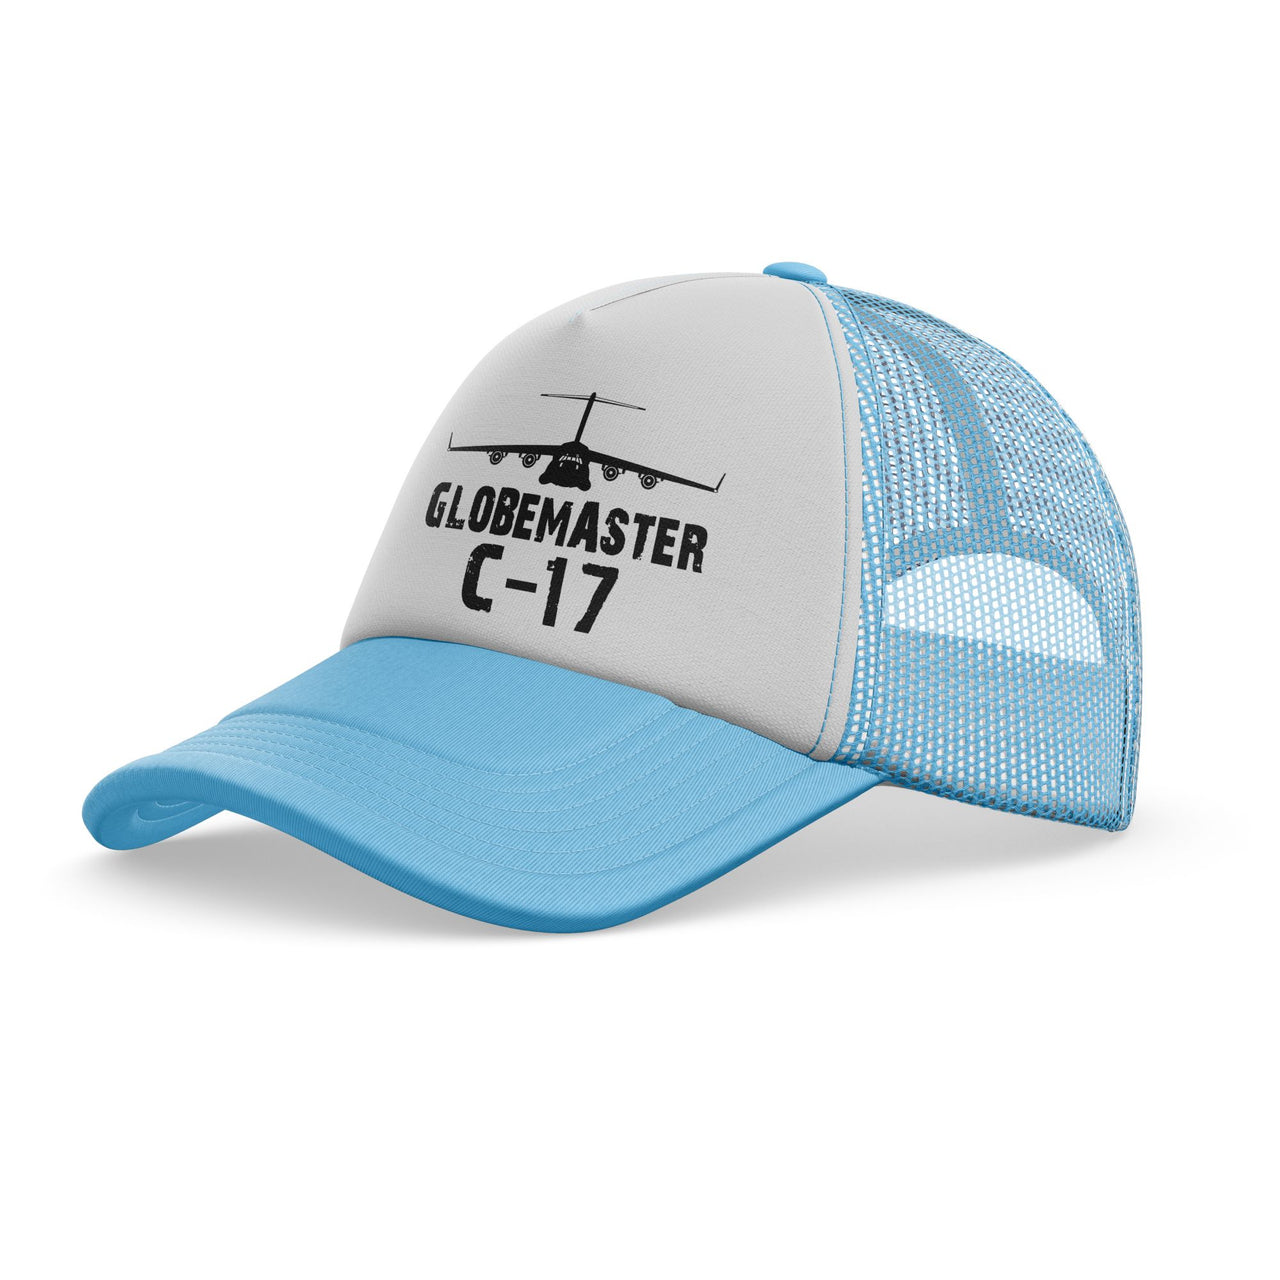 GlobeMaster C-17 & Plane Designed Trucker Caps & Hats